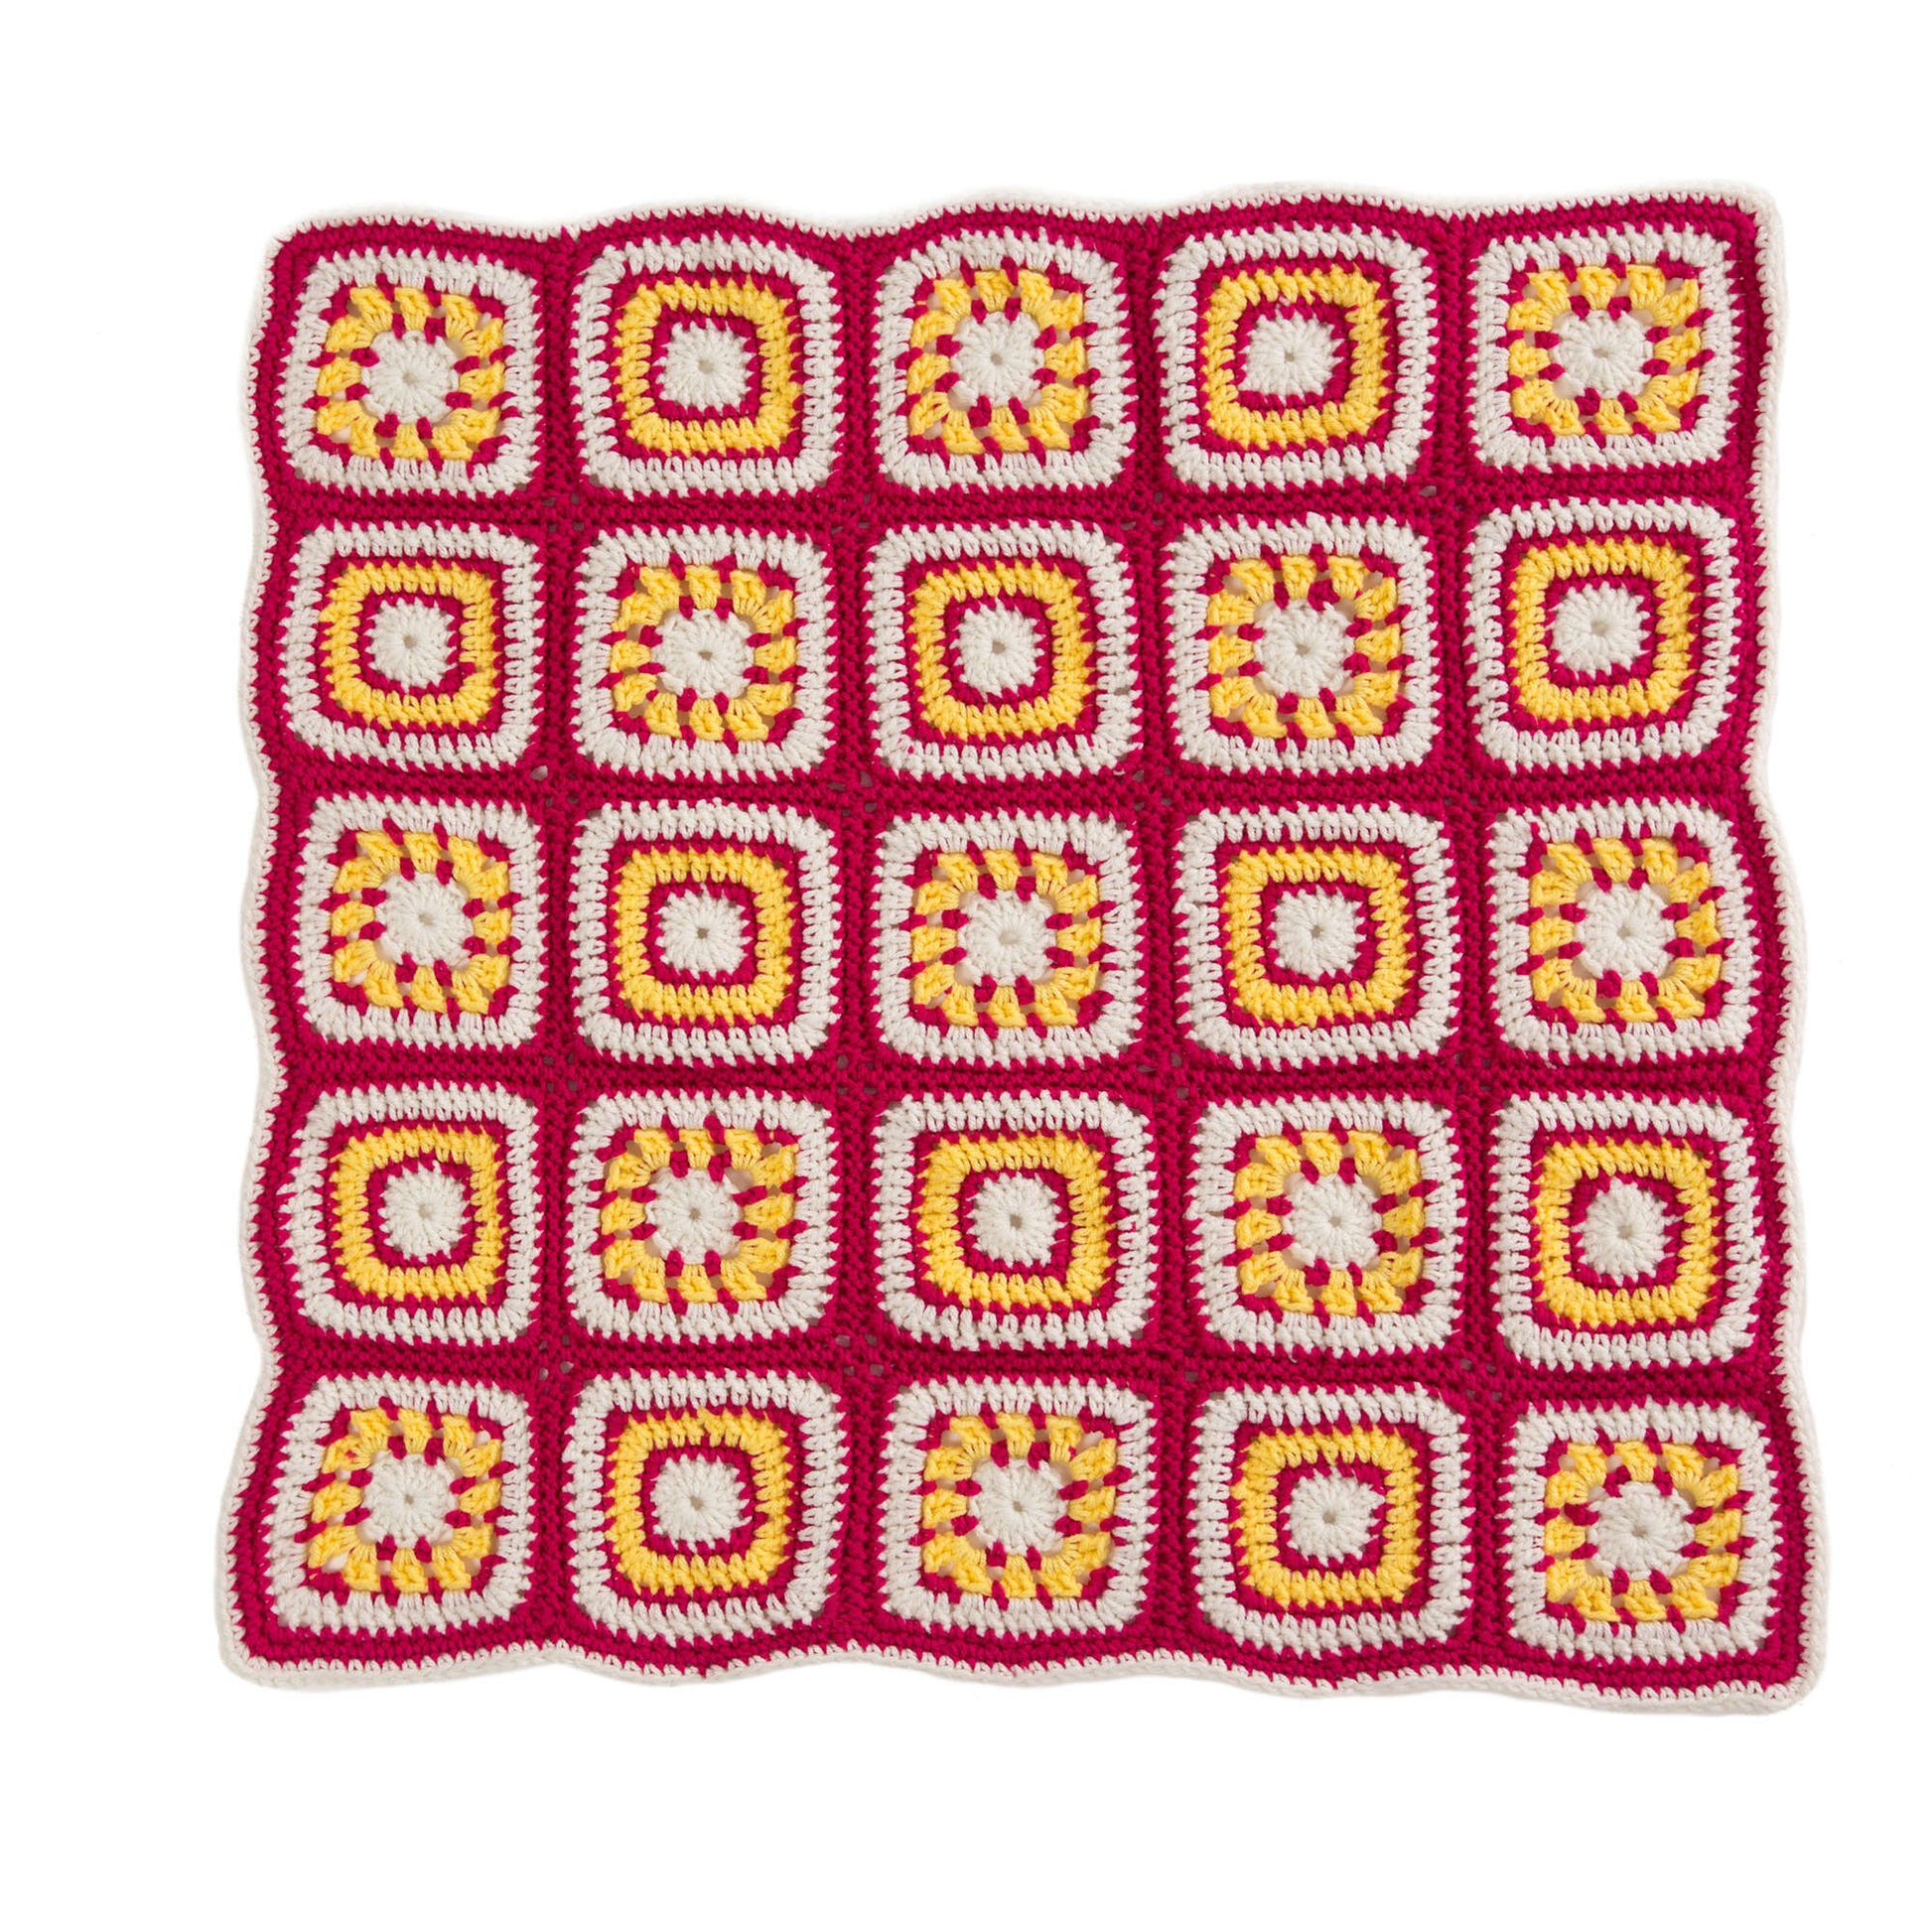 Free Red Heart Bright Eyes Crochet Baby Blanket Pattern